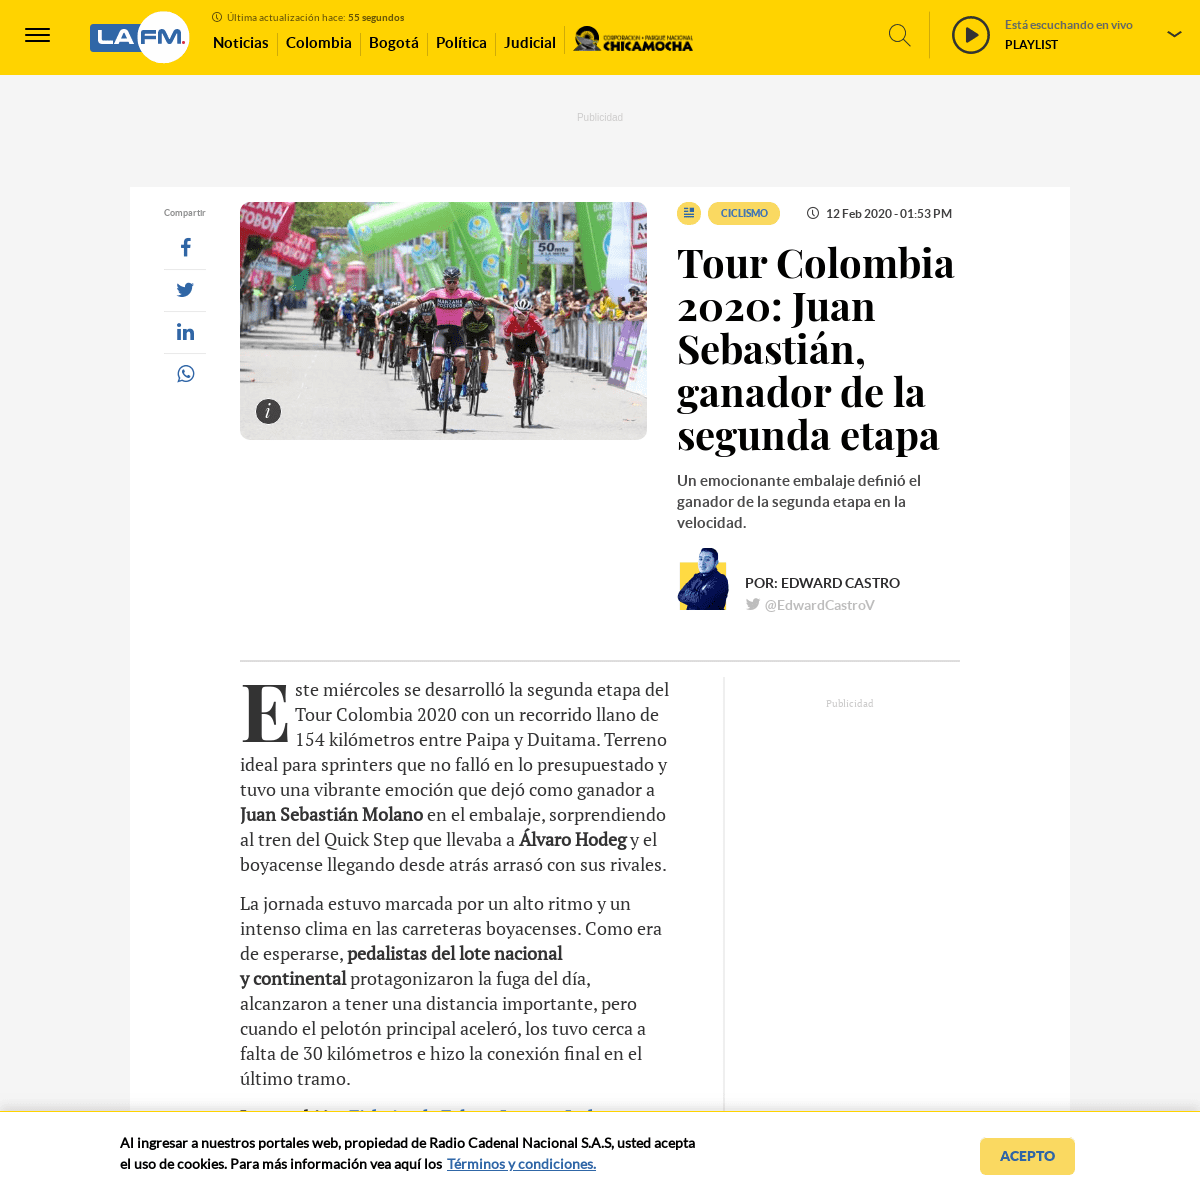 A complete backup of www.lafm.com.co/deportes/ciclismo/tour-colombia-2020-juan-sebastian-ganador-de-la-segunda-etapa